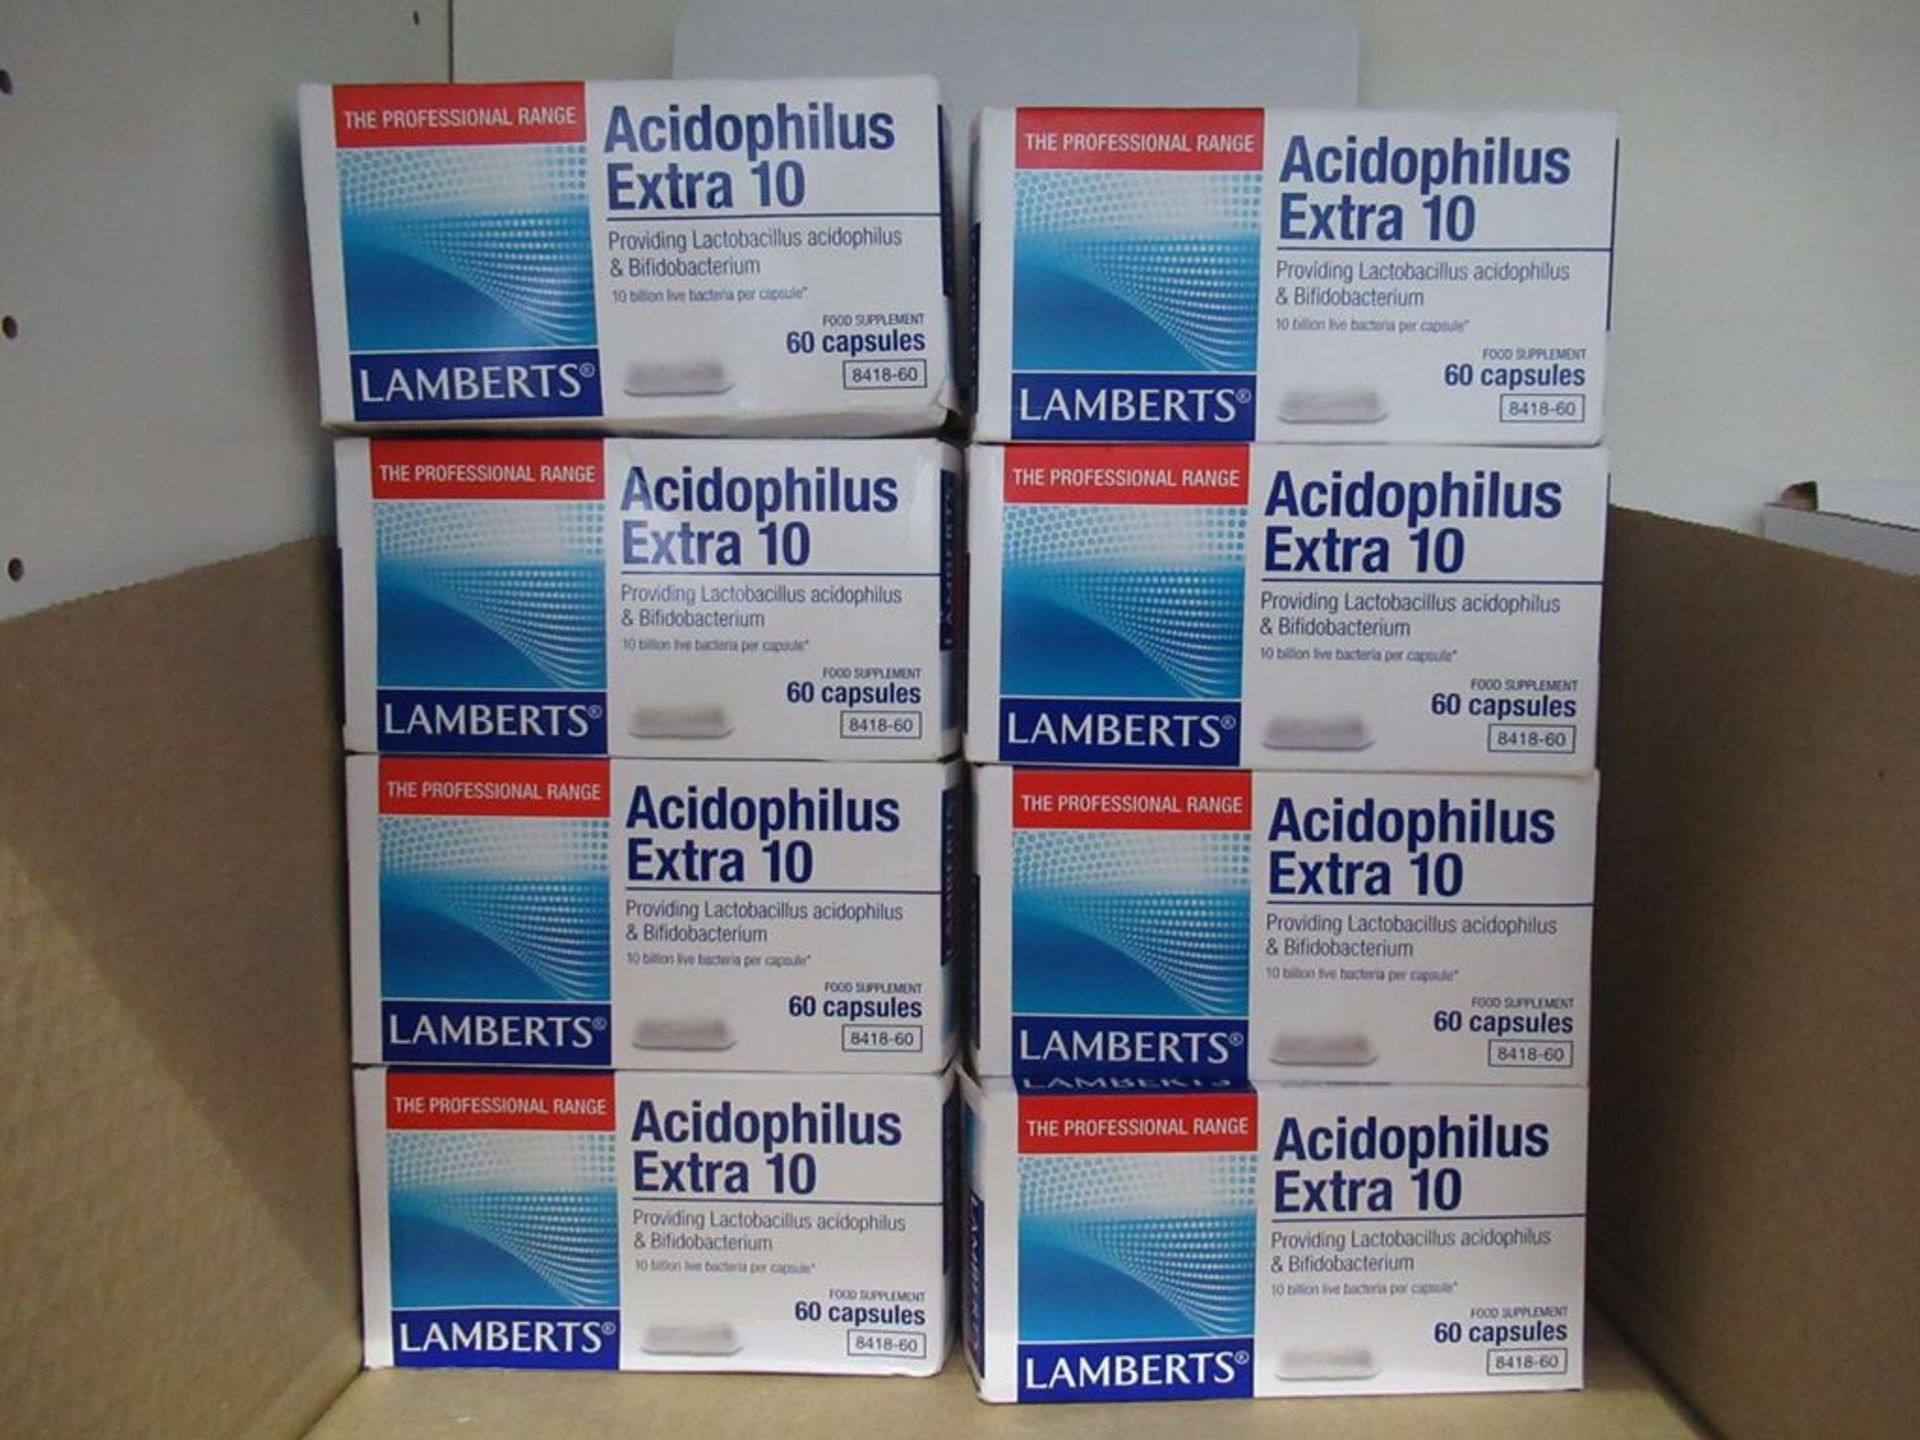 7 x boxes of 'Lamberts' Acidophilus Extra 10 capsules